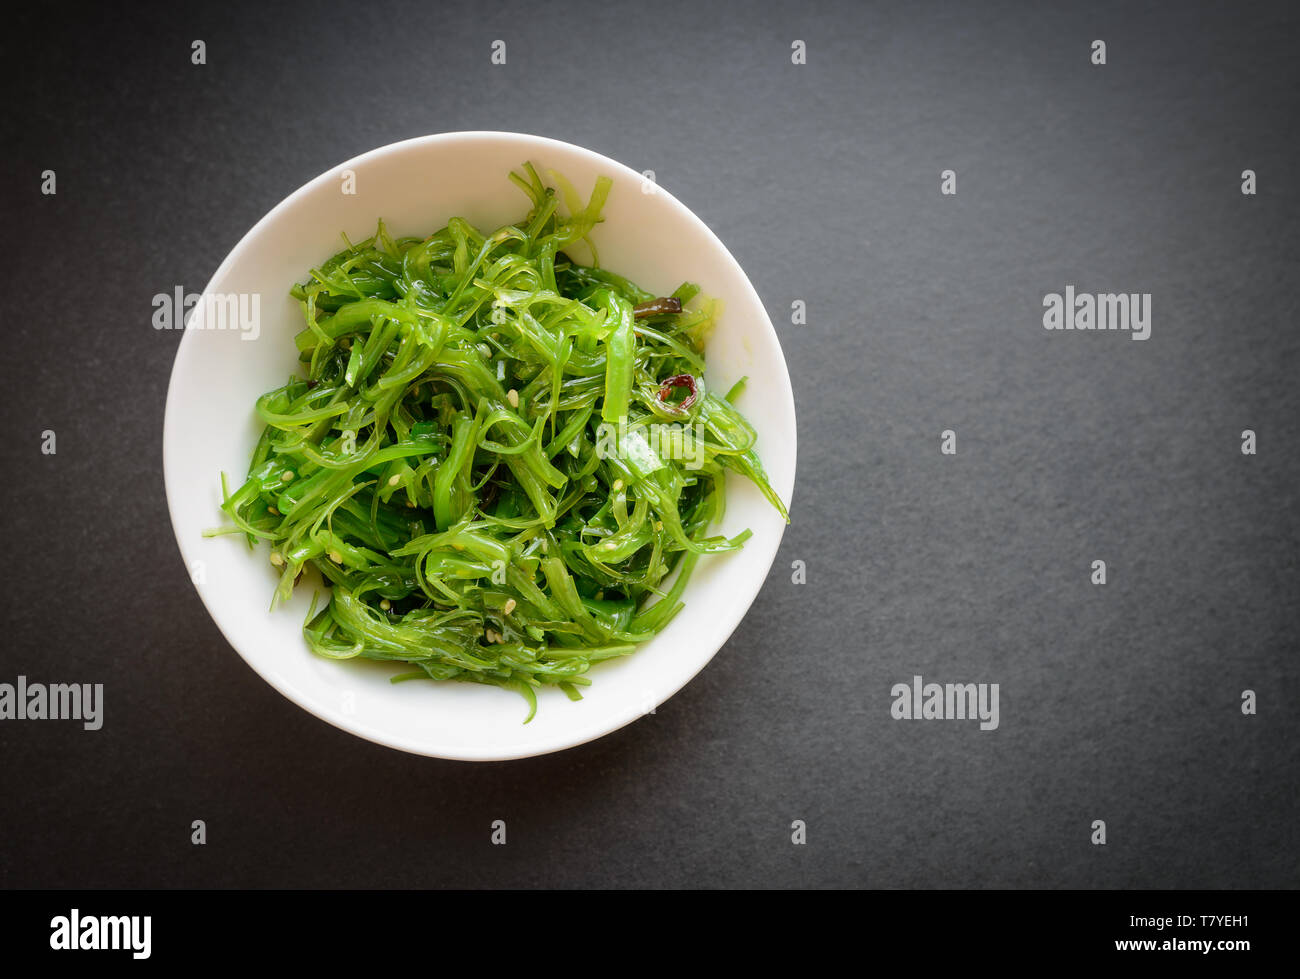 Wakame salad or seaweed salad on dark background. Selective focus. Stock Photo